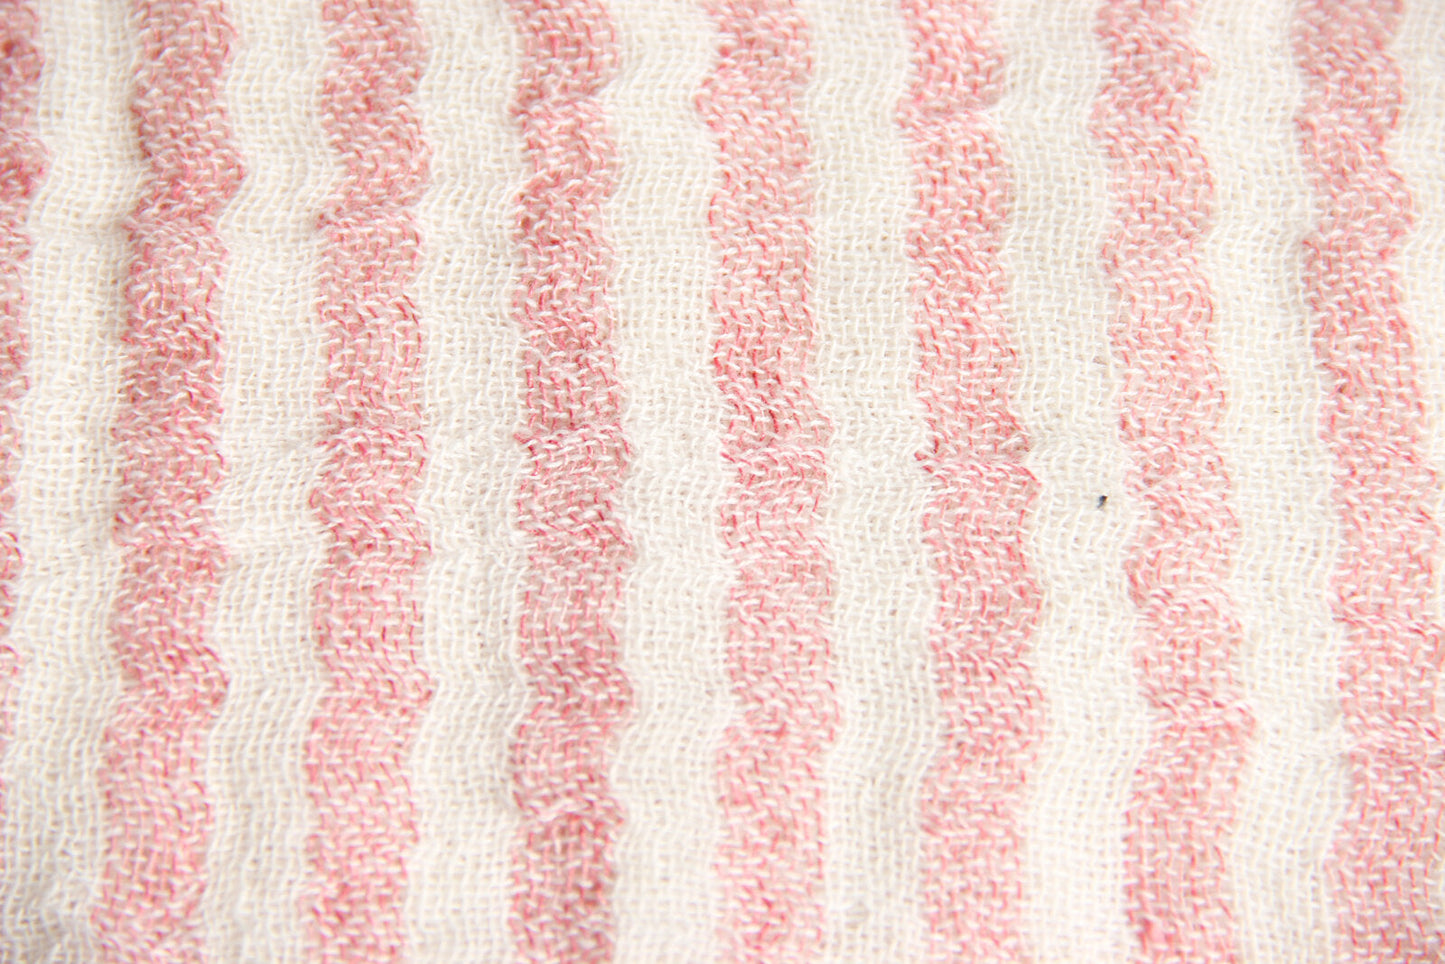 Sara - Cotton Linen Towel